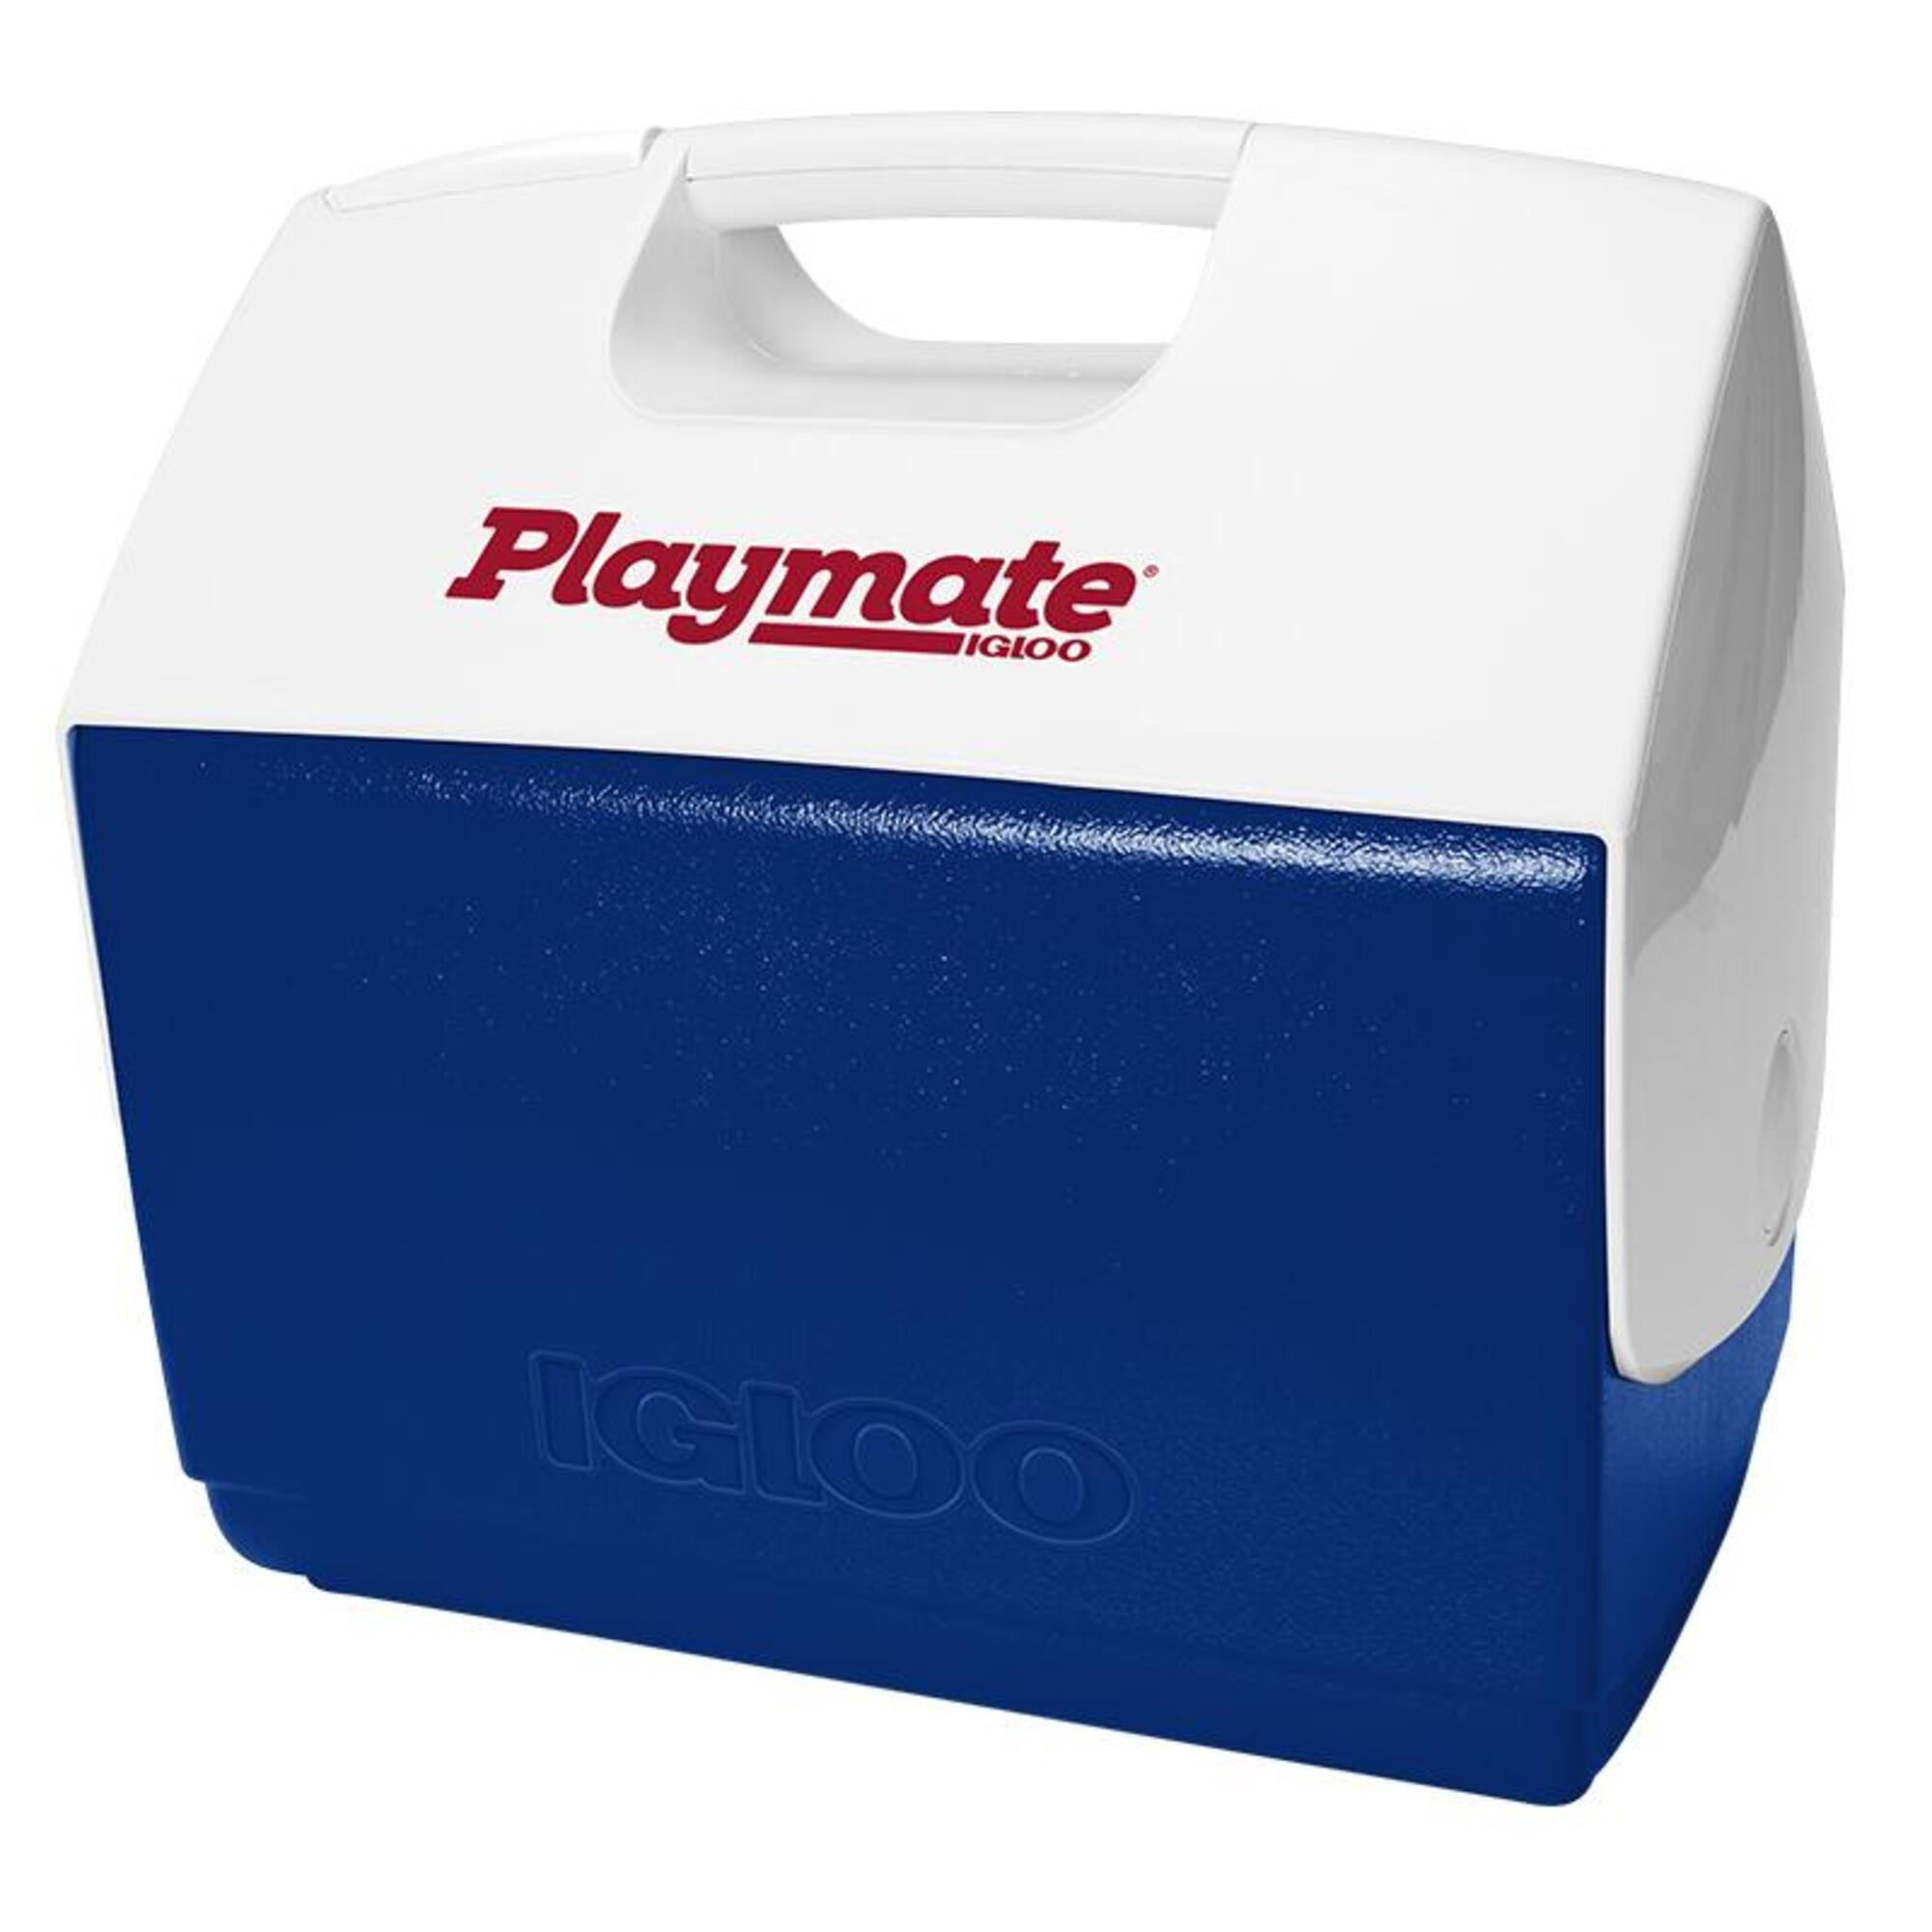 Igloo Playmate Rigid Cooler Capacità 15 litri o 30 lattine